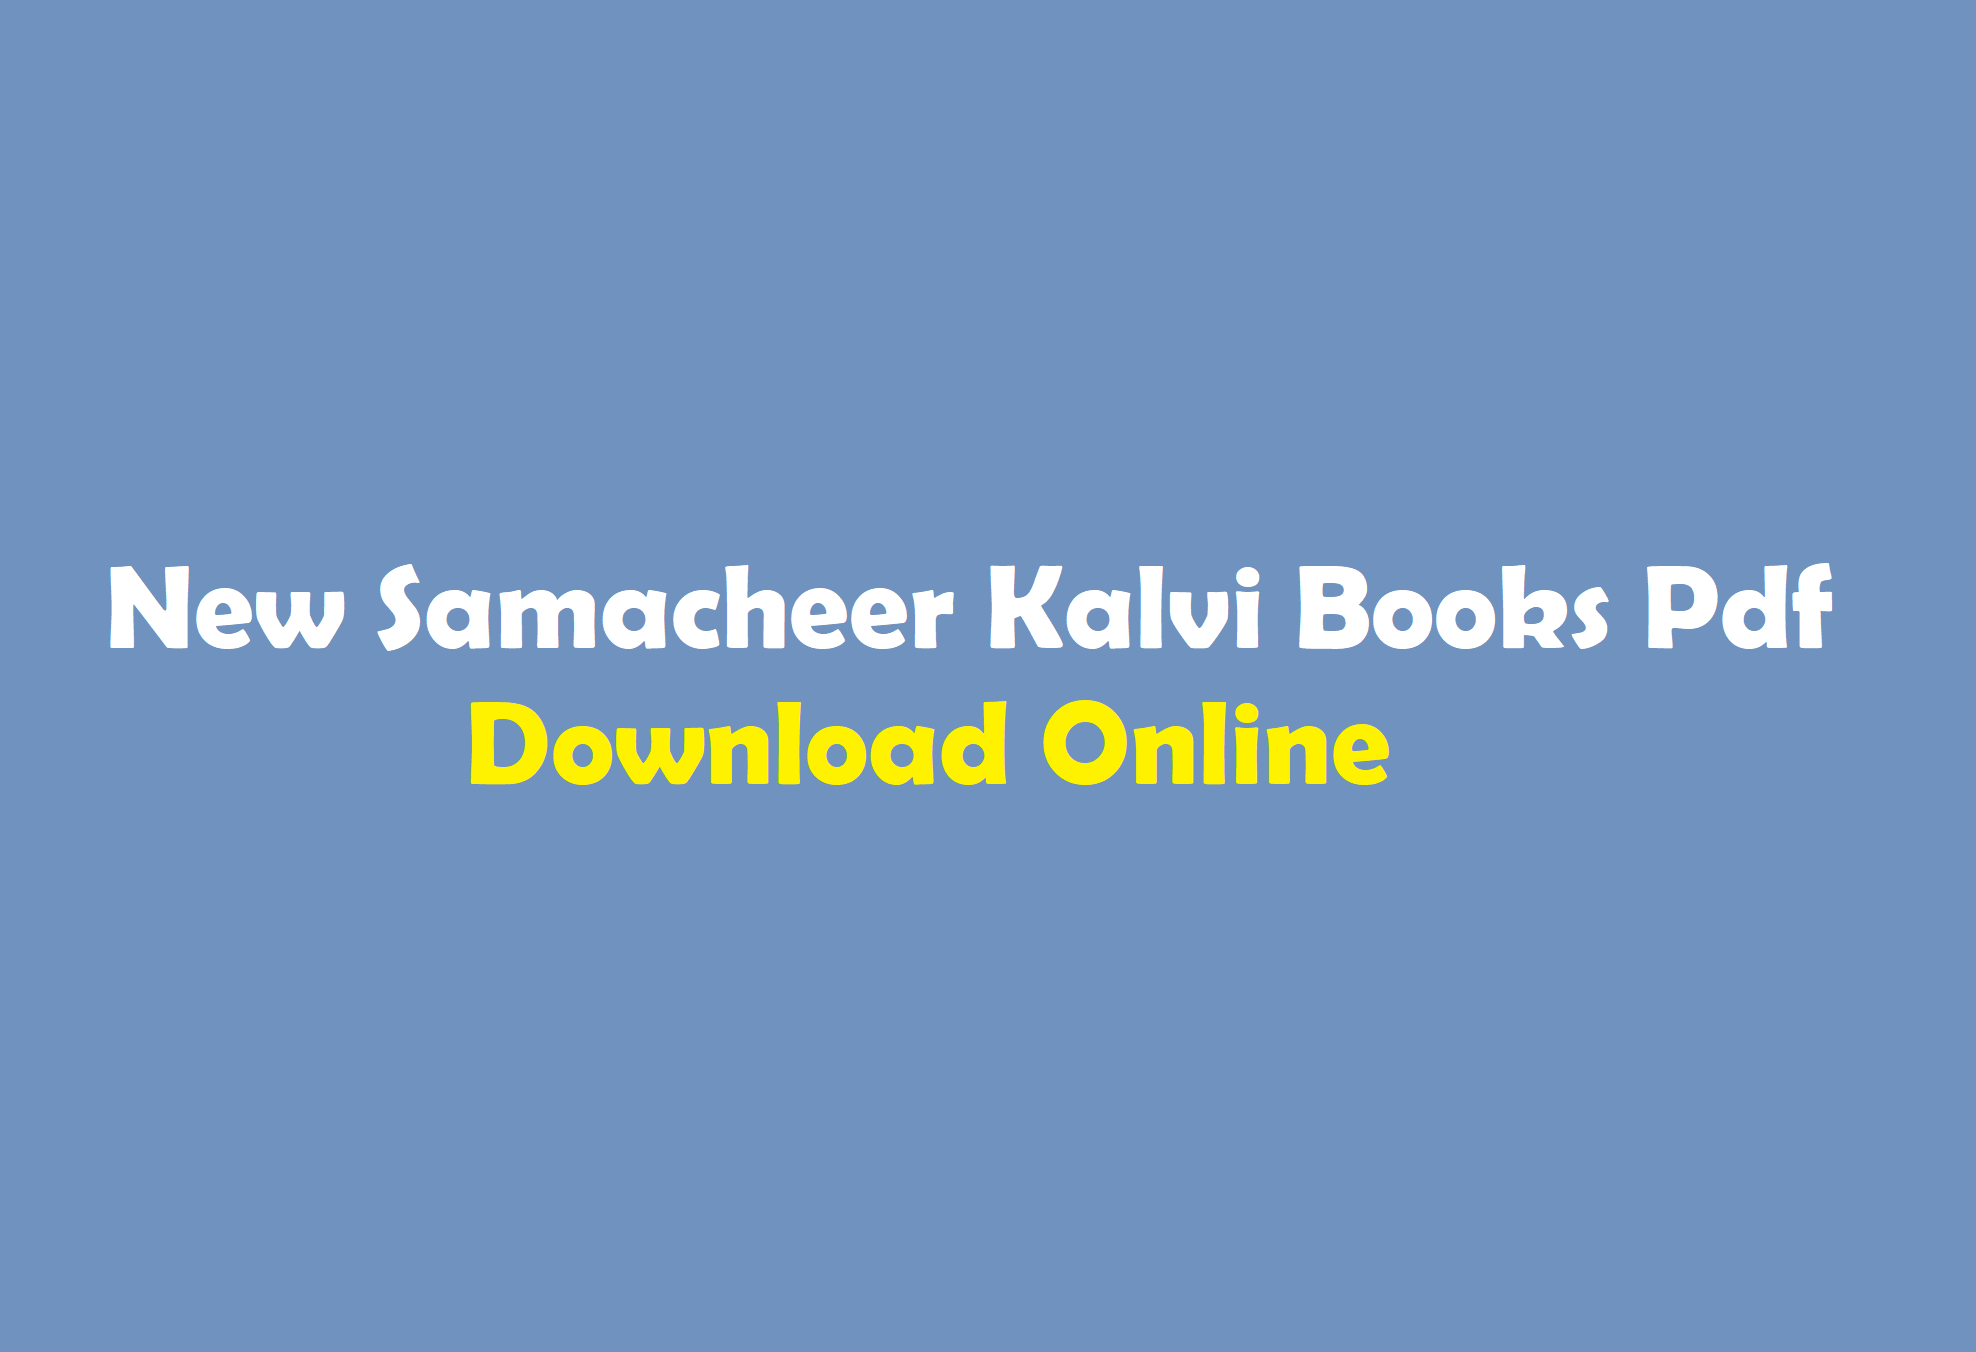 tamilnadu samacheer books pdf download